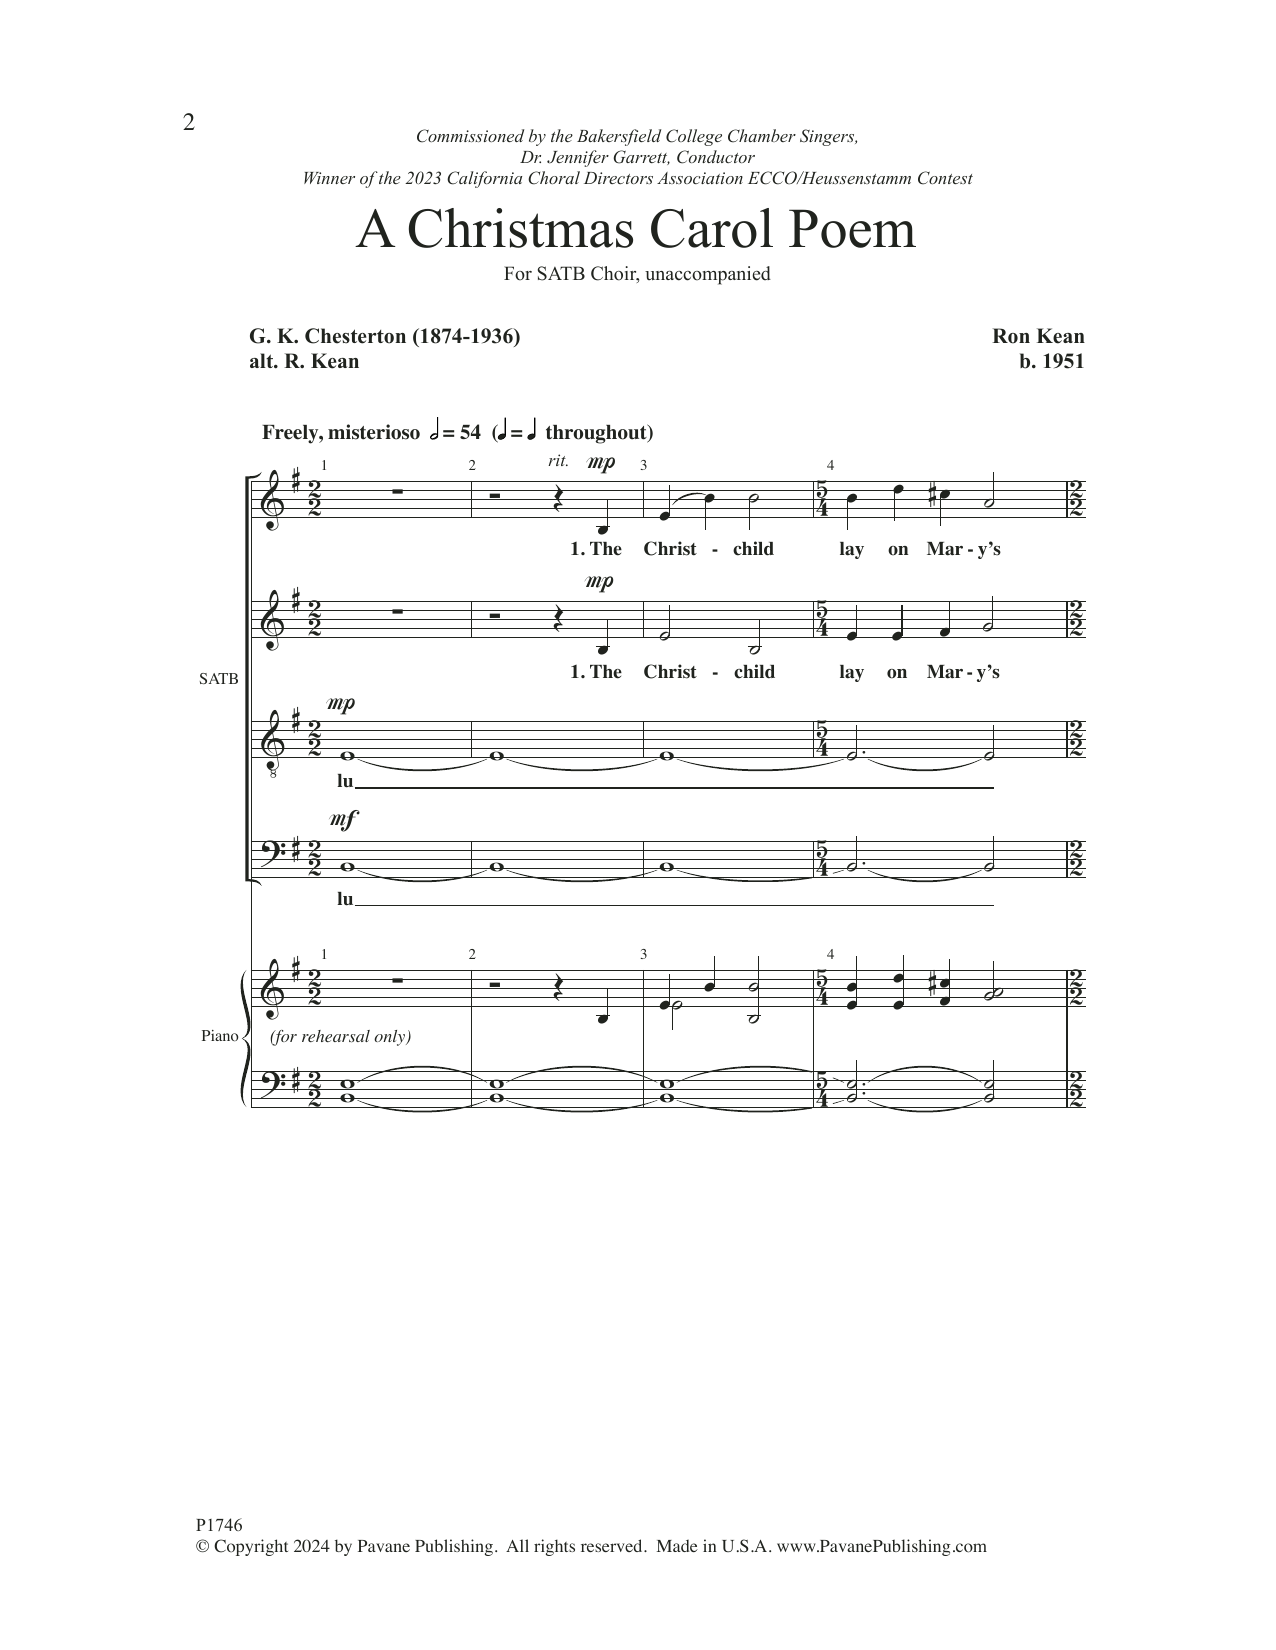 Ron Kean A Christmas Carol Poem Sheet Music Notes & Chords for SATB Choir - Download or Print PDF